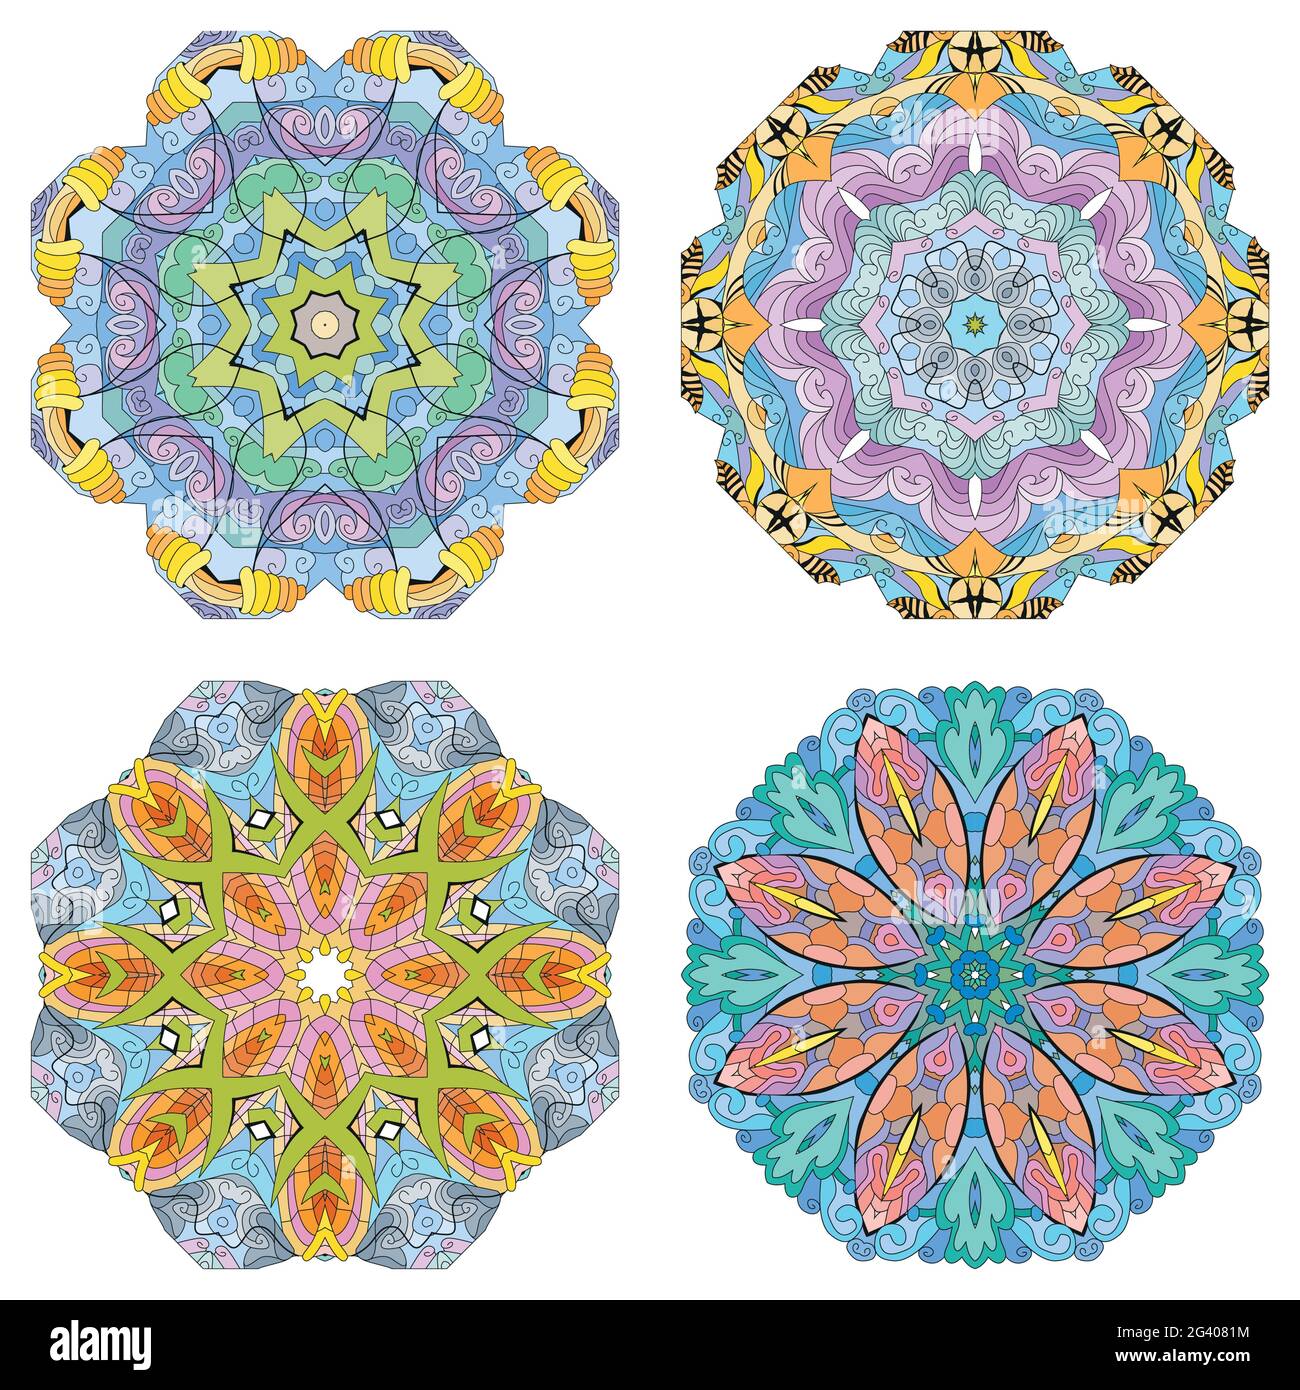 Hand-painted art design. Color hand drawn illustration set of 4 mandalas for decoration Stock Vector